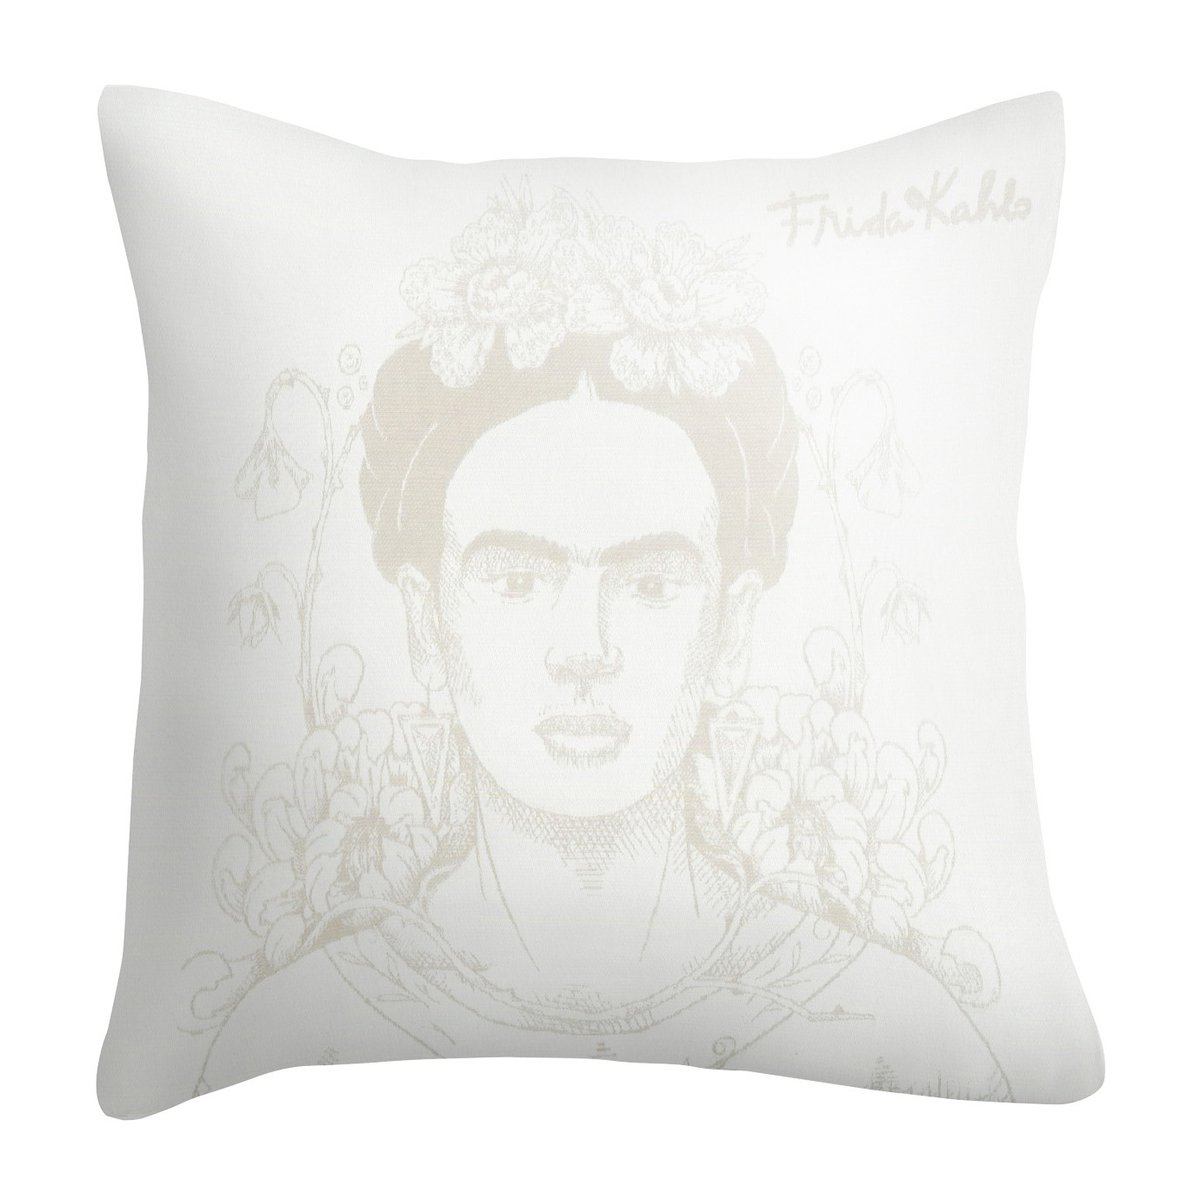 Ekelund Linneväveri Frida Kahlo -tyynynpäällinen 40 x 40 cm Belleza